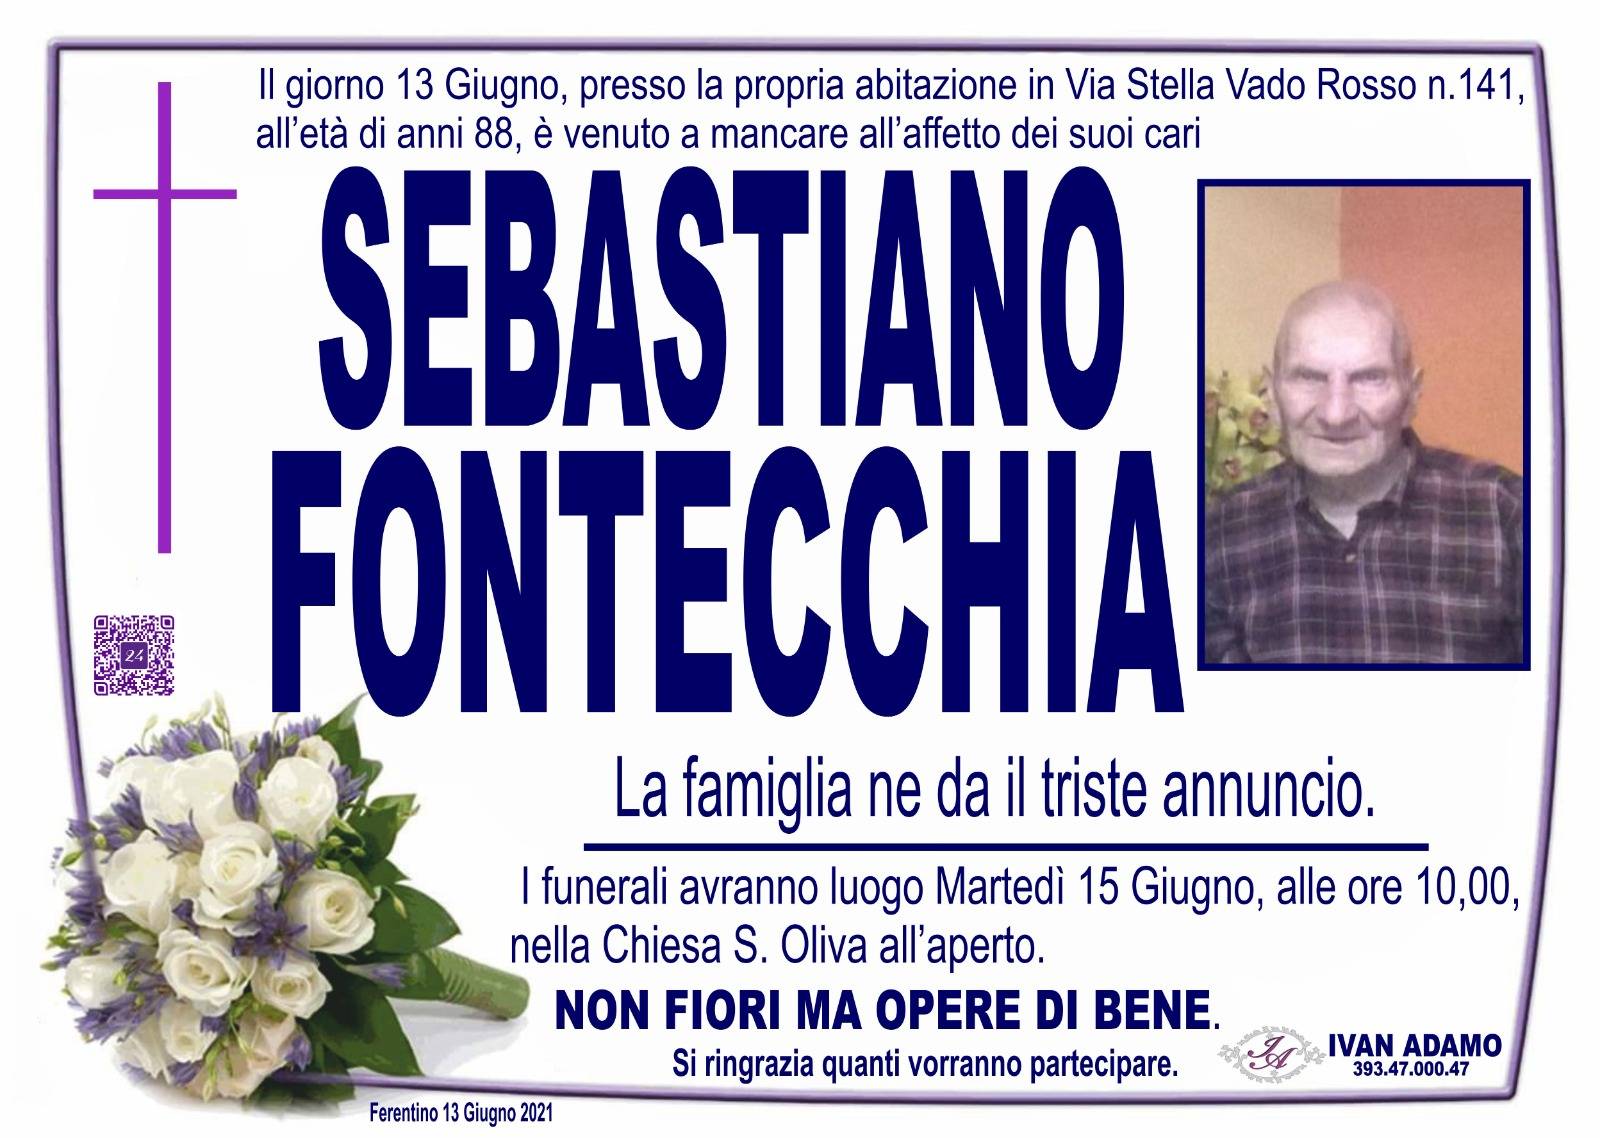 Sebastiano Fontecchia